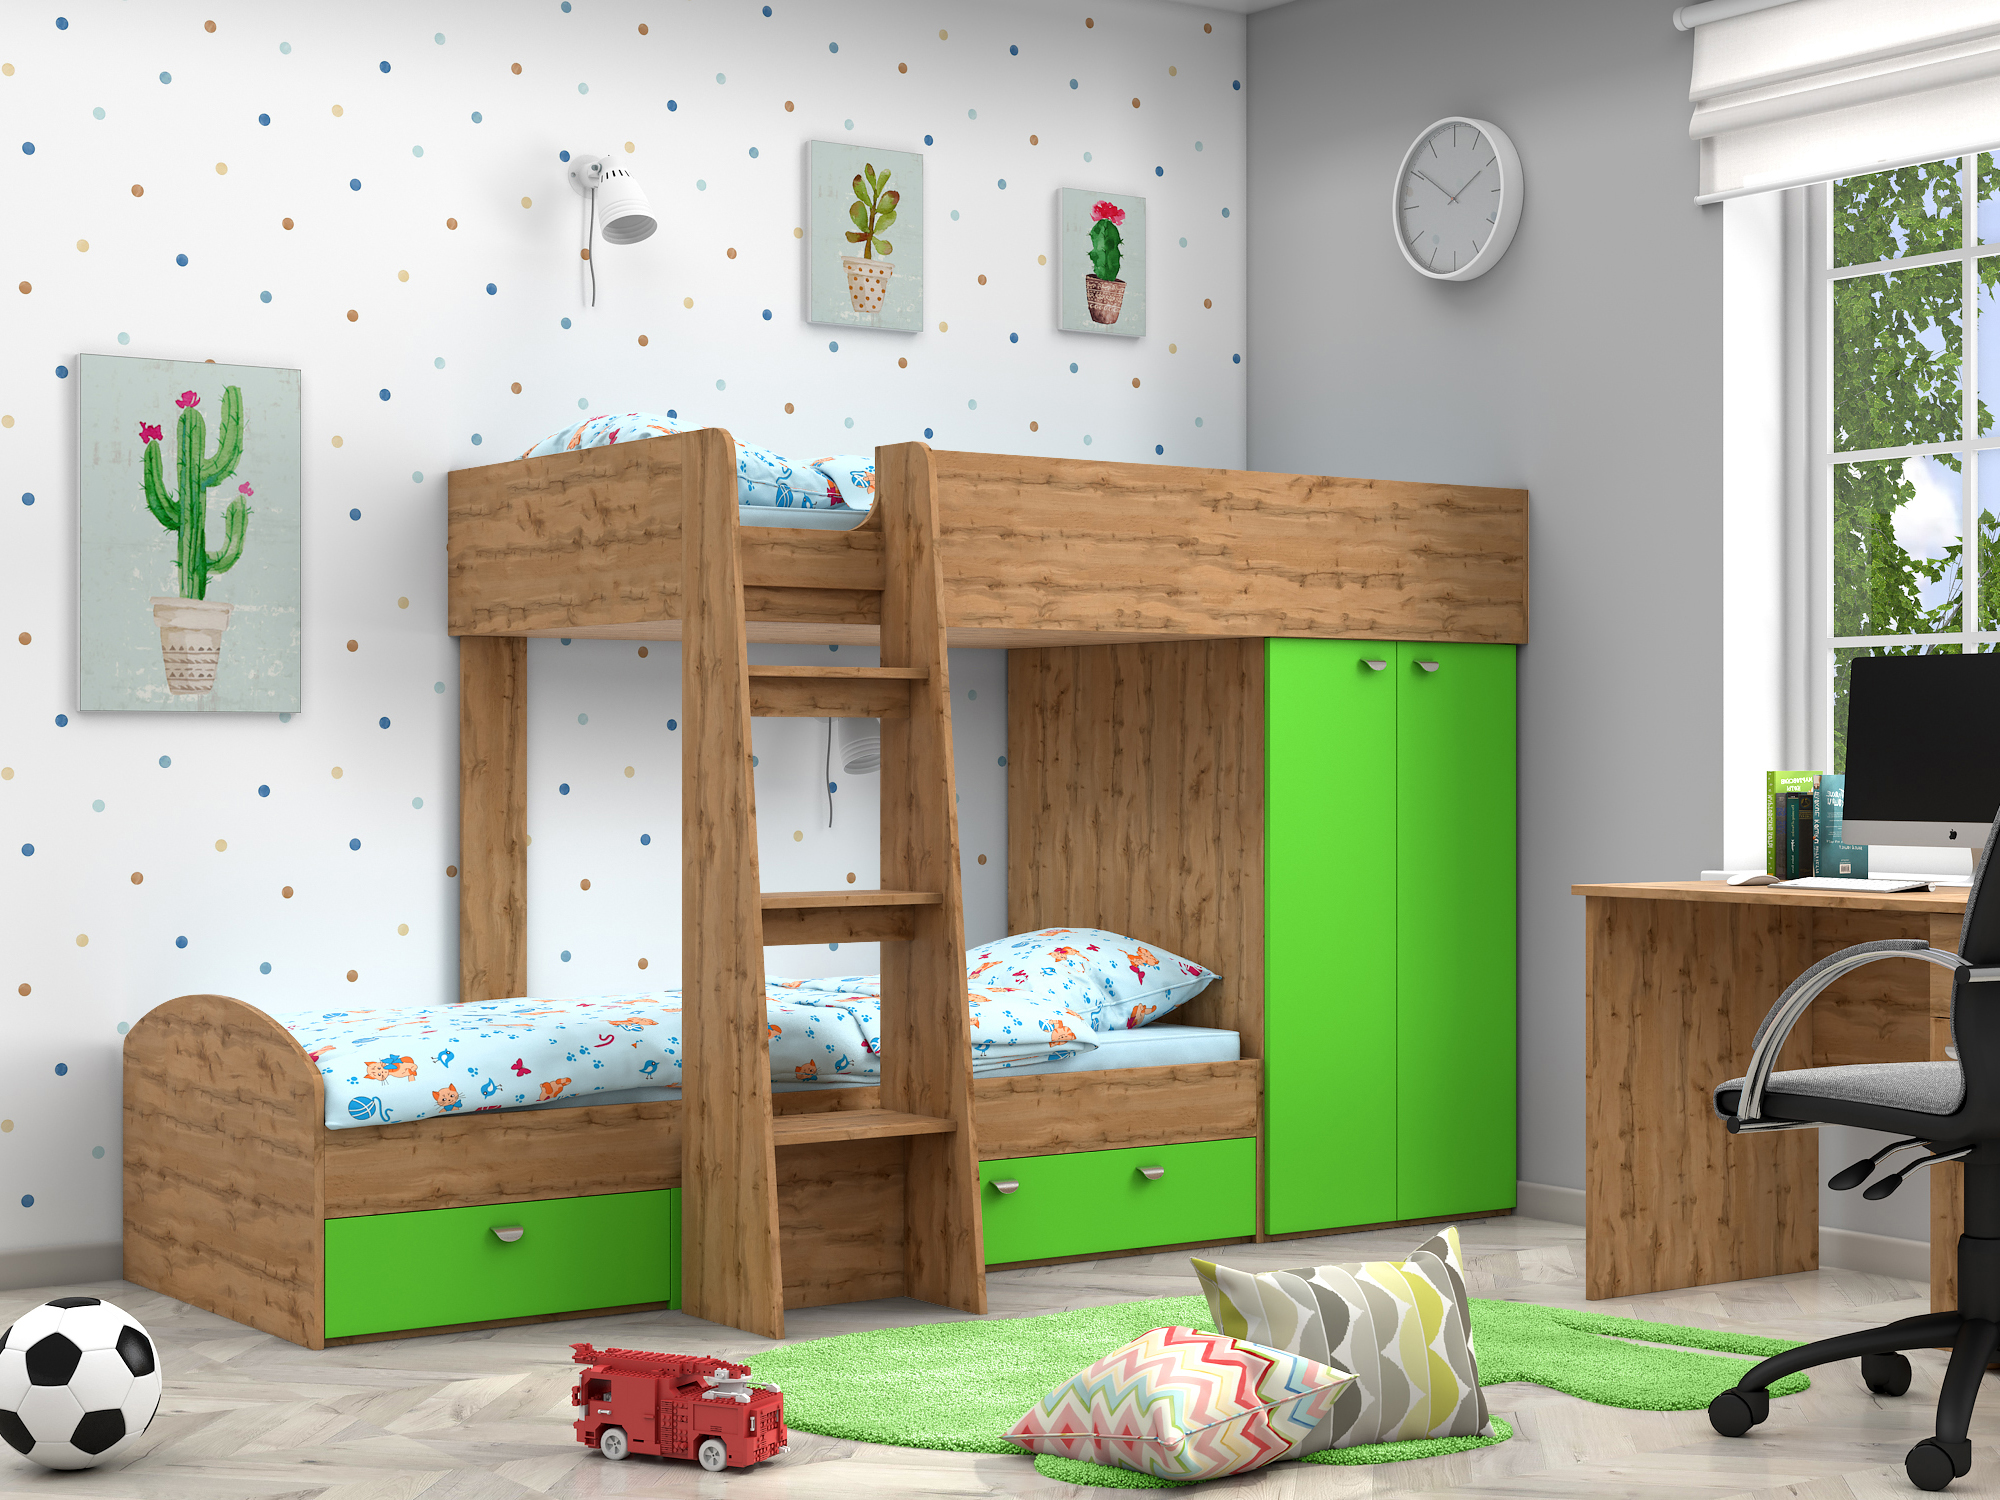 Двухъярусная кровать Golden Kids-2 (90х200) Зеленый, Бежевый, ЛДСП двухъярусная кровать golden kids 2 90х200 зеленый бежевый лдсп